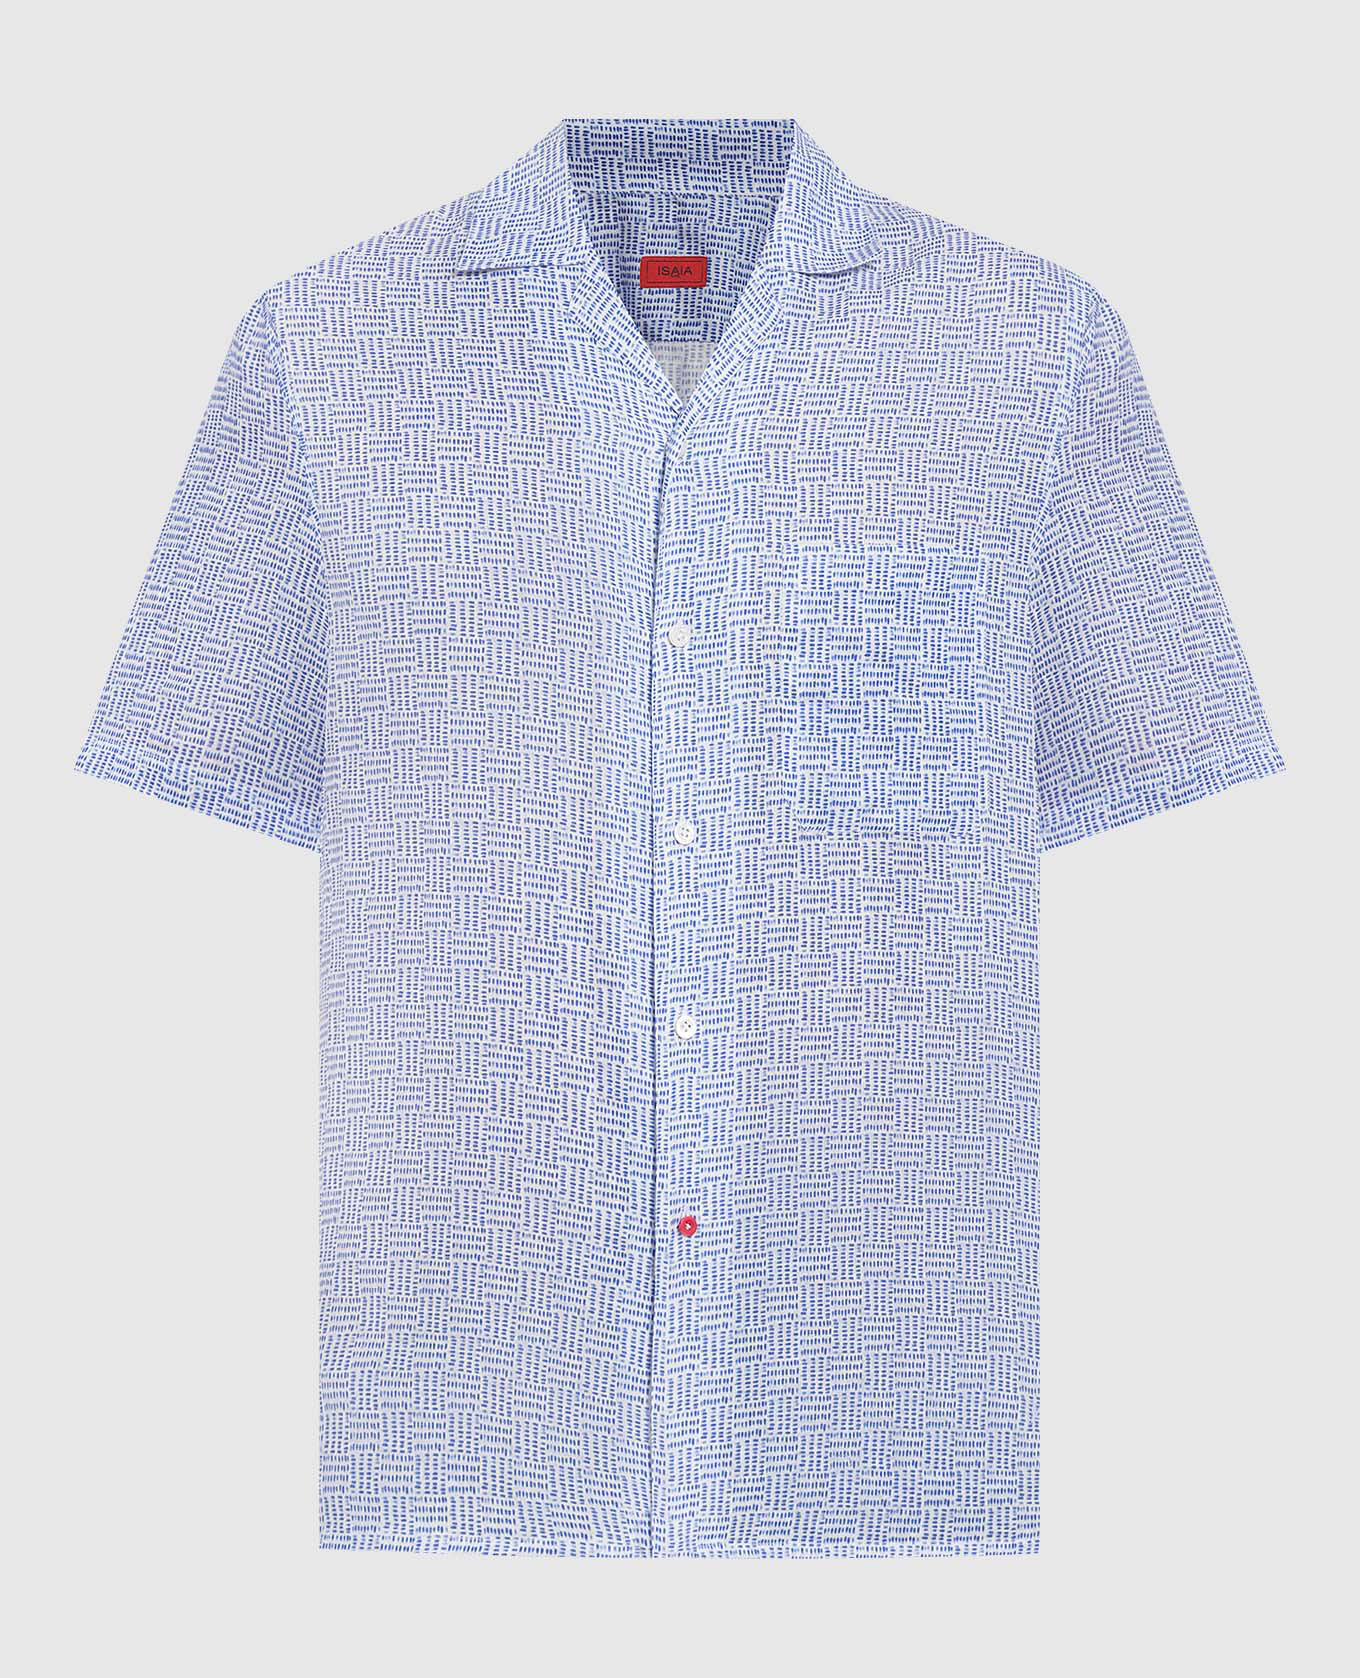 Blue linen shirt in a geometric pattern